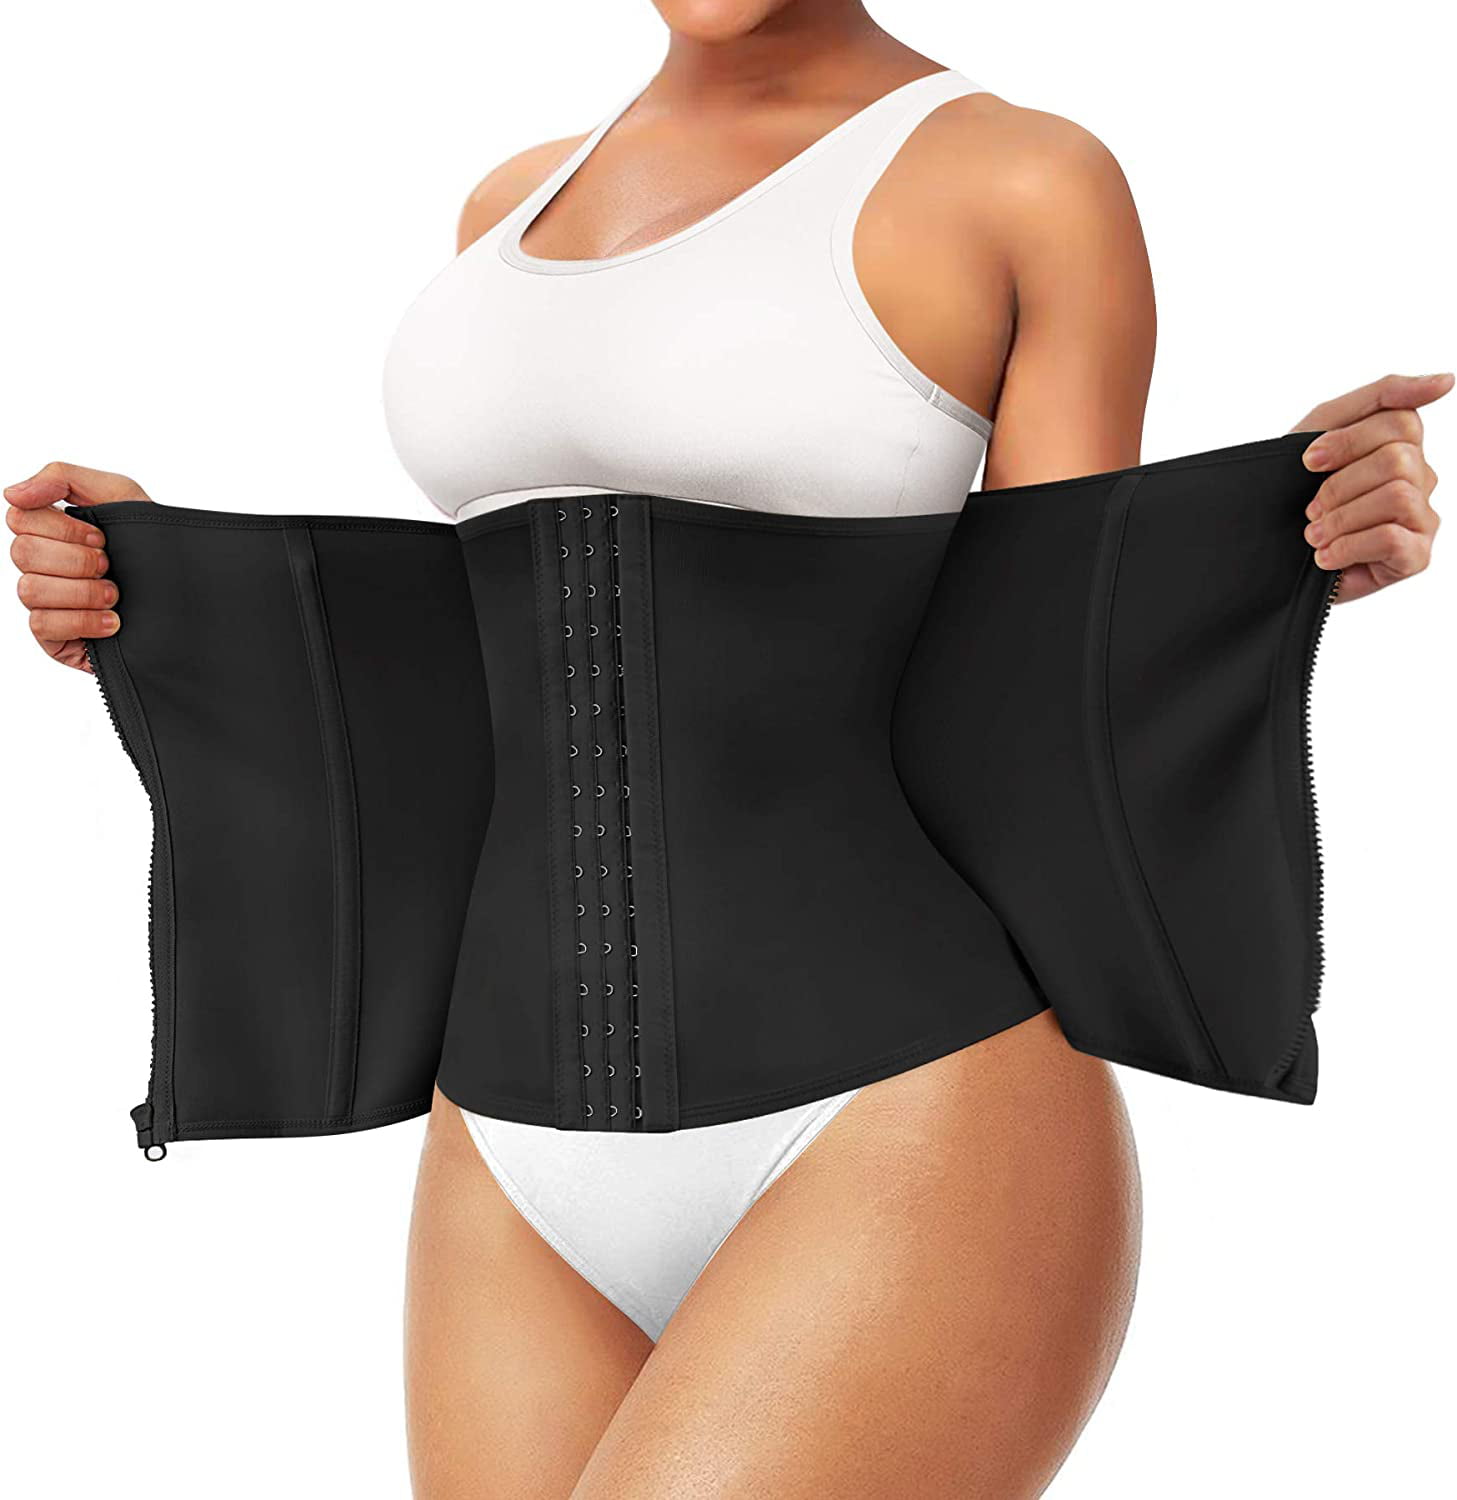 Womens Waist Trainer Fitness Corset Sport Body Shaper Vest,Ladies Workout Slimming Tummy Control Underbust 